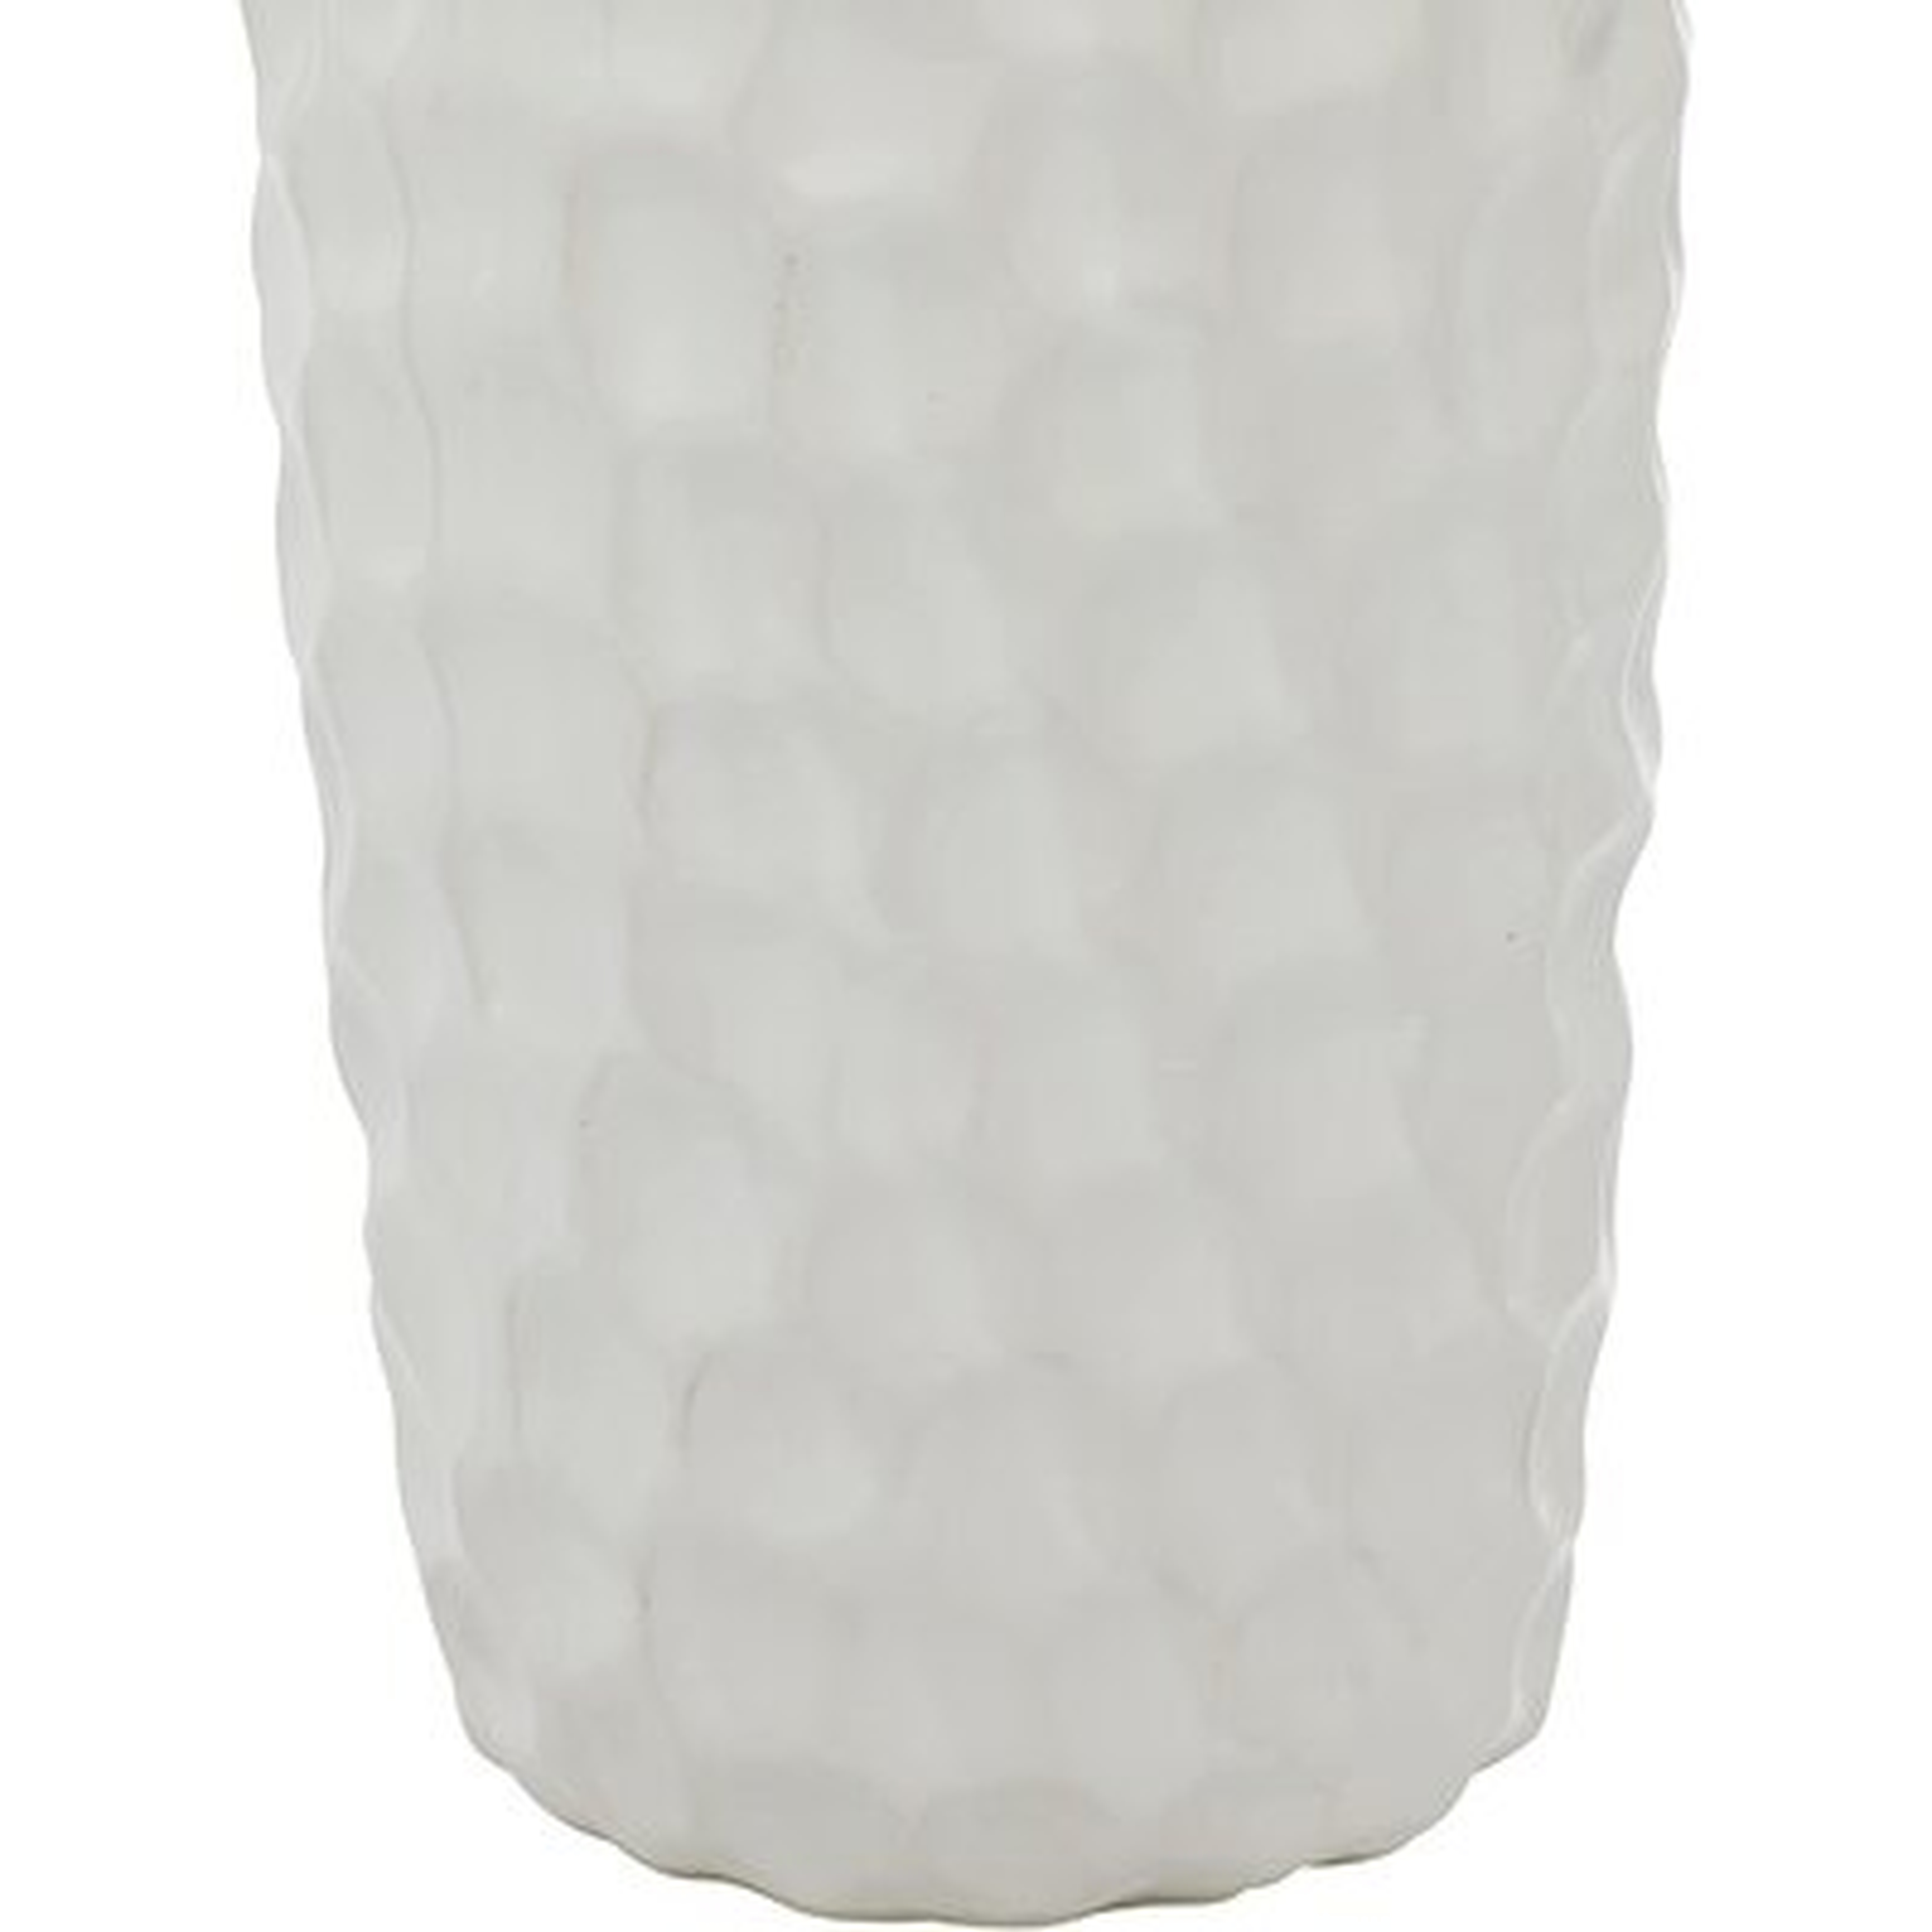 Dimpled Honeycomb Designed White Ceramic Vase, 9" X 5", 2 Piece - Wayfair